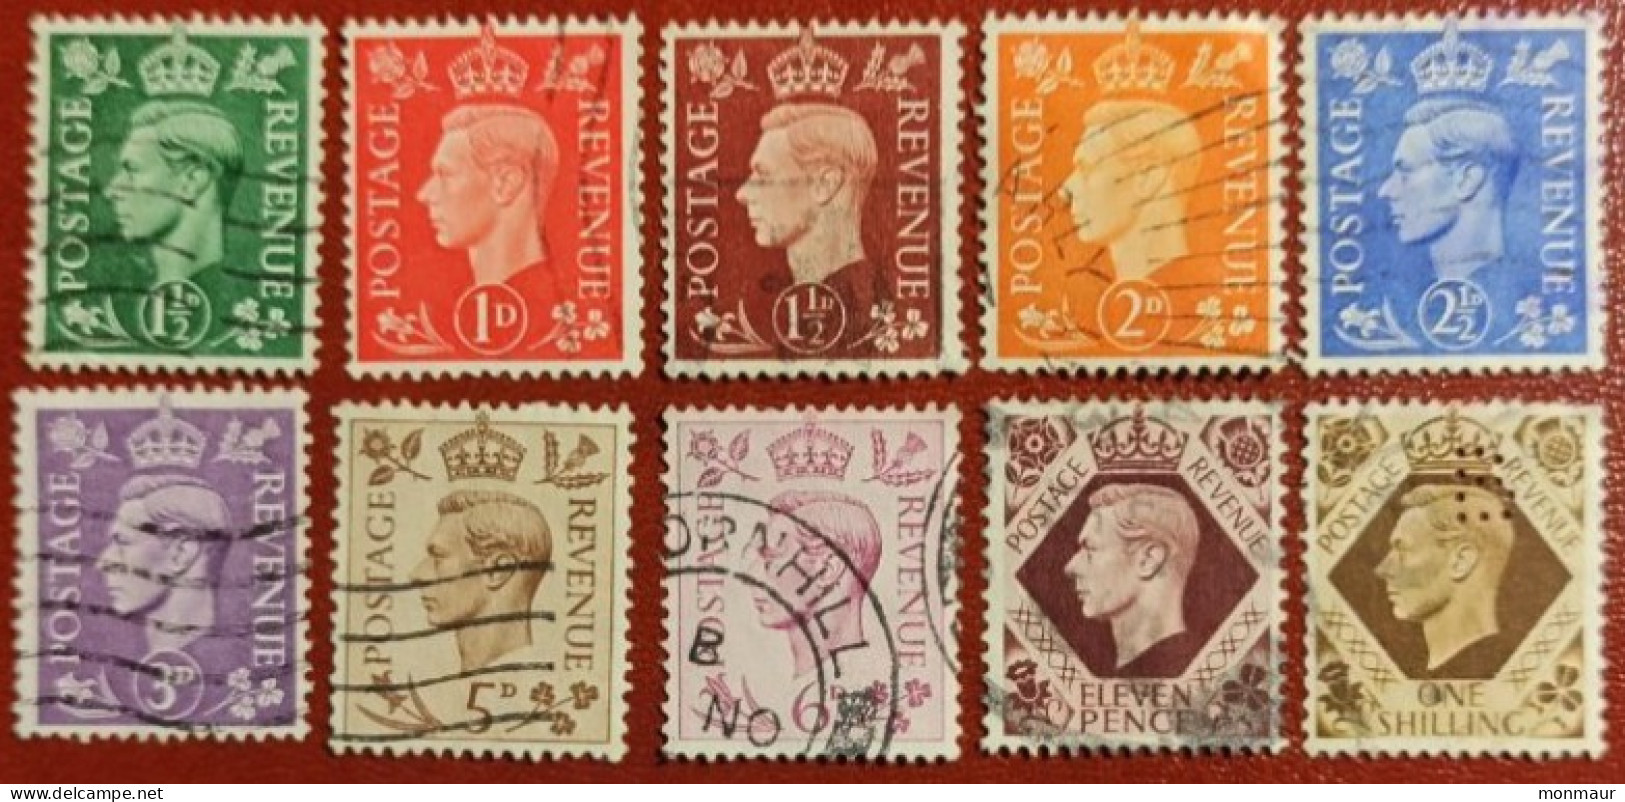 GRAN BRETAGNA  1937 GEORGE VI  YT 209-210-211-212-213-214-216-217-221-222 - Used Stamps